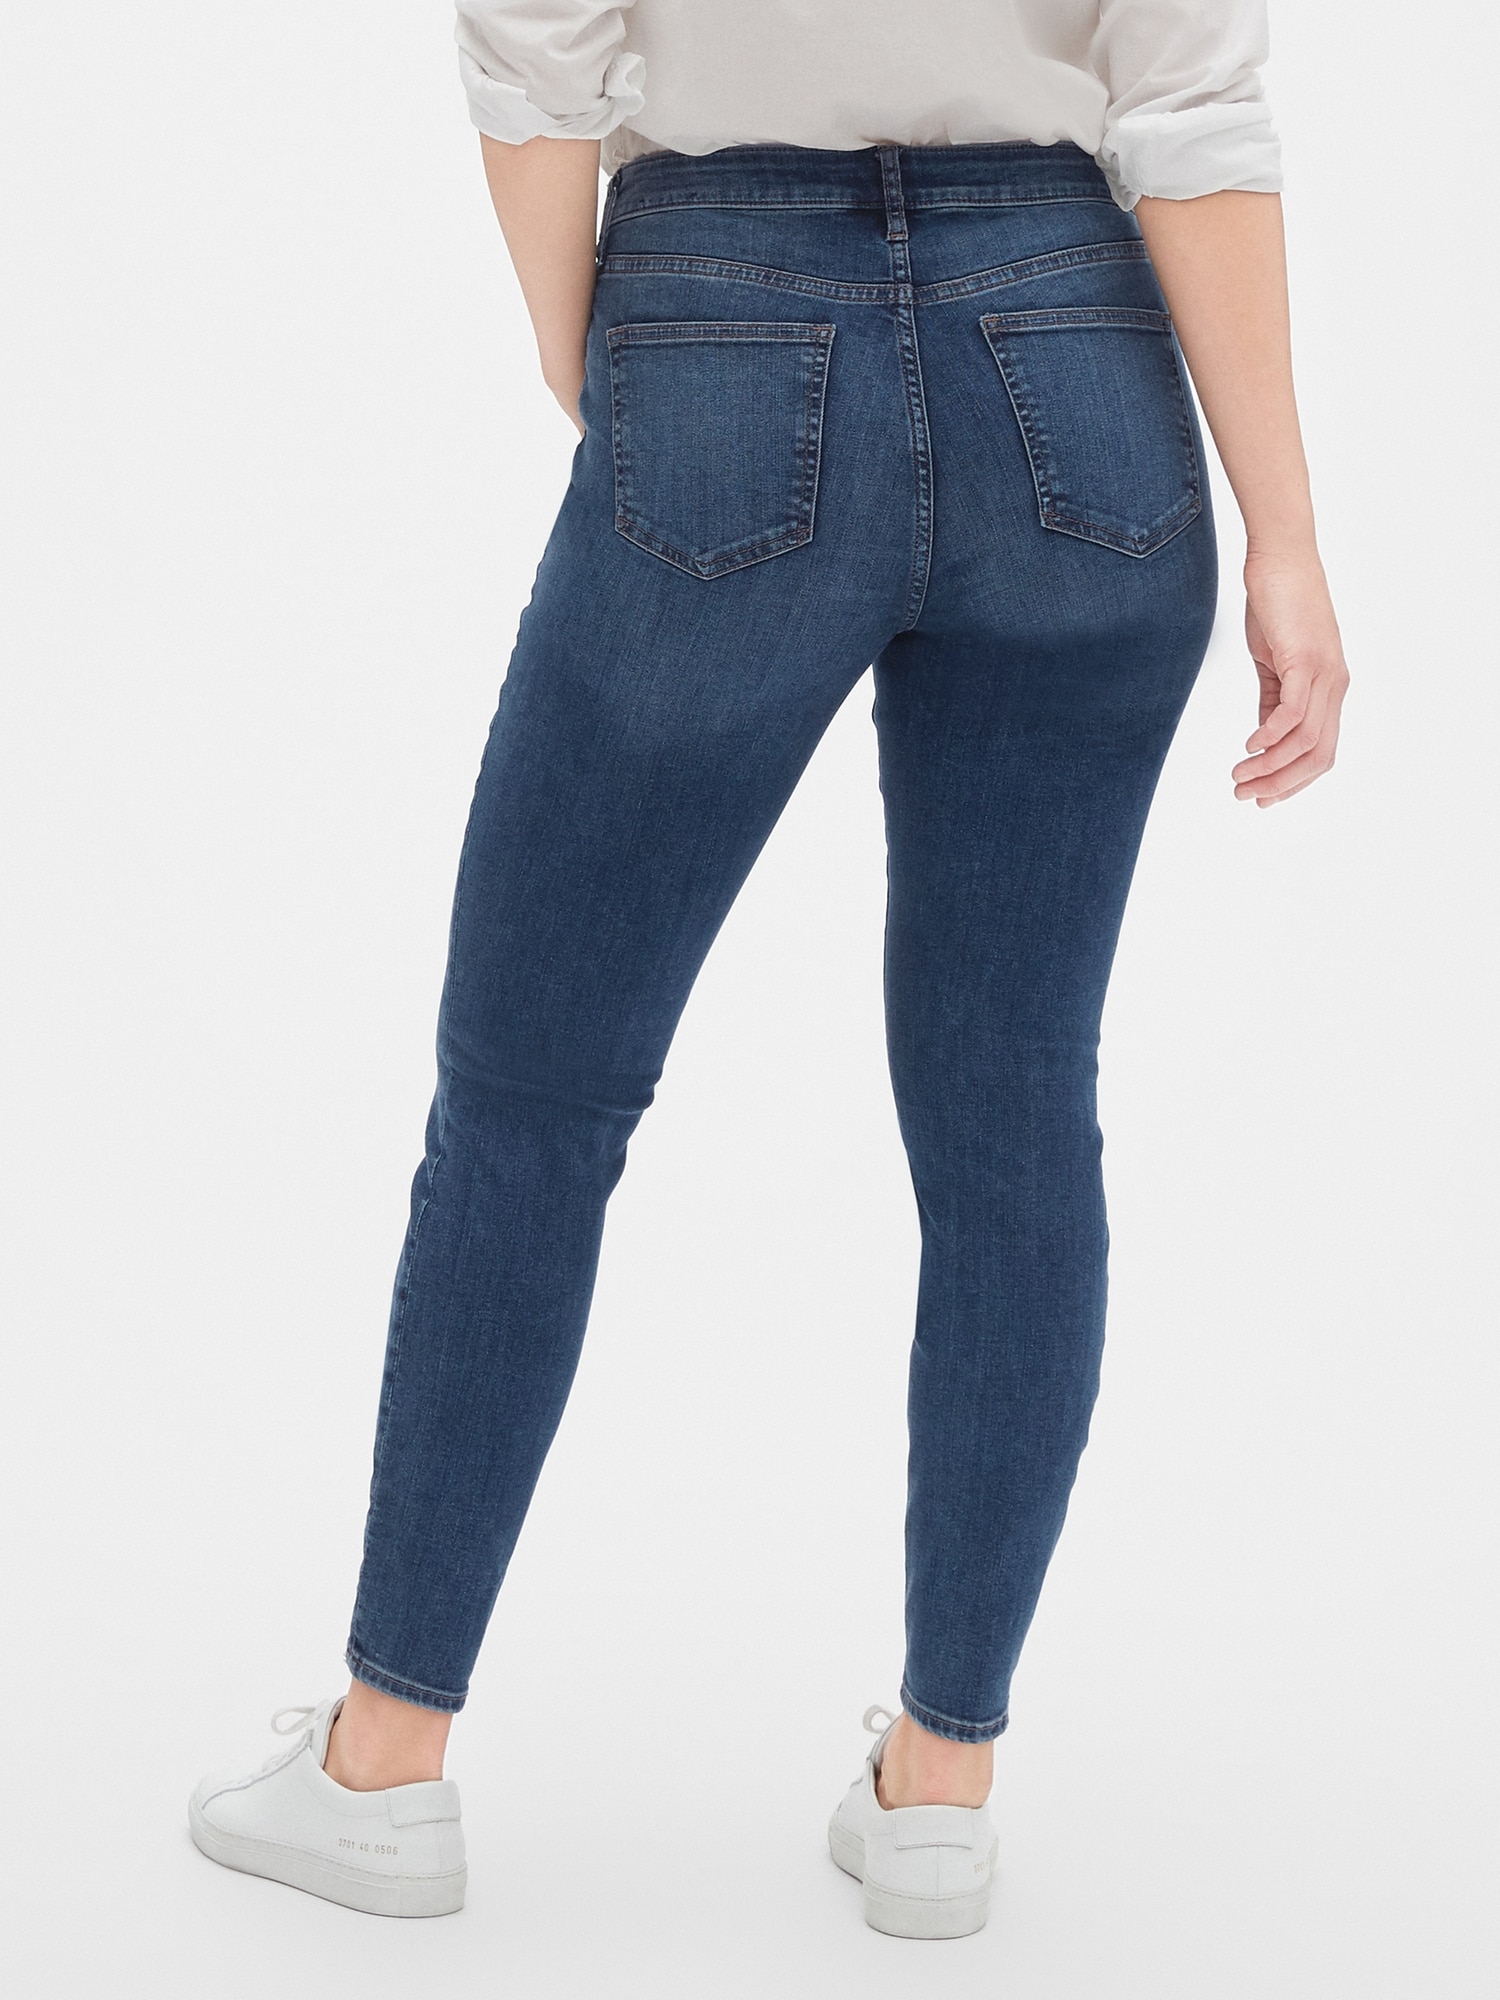 gap true skinny curvy jeans